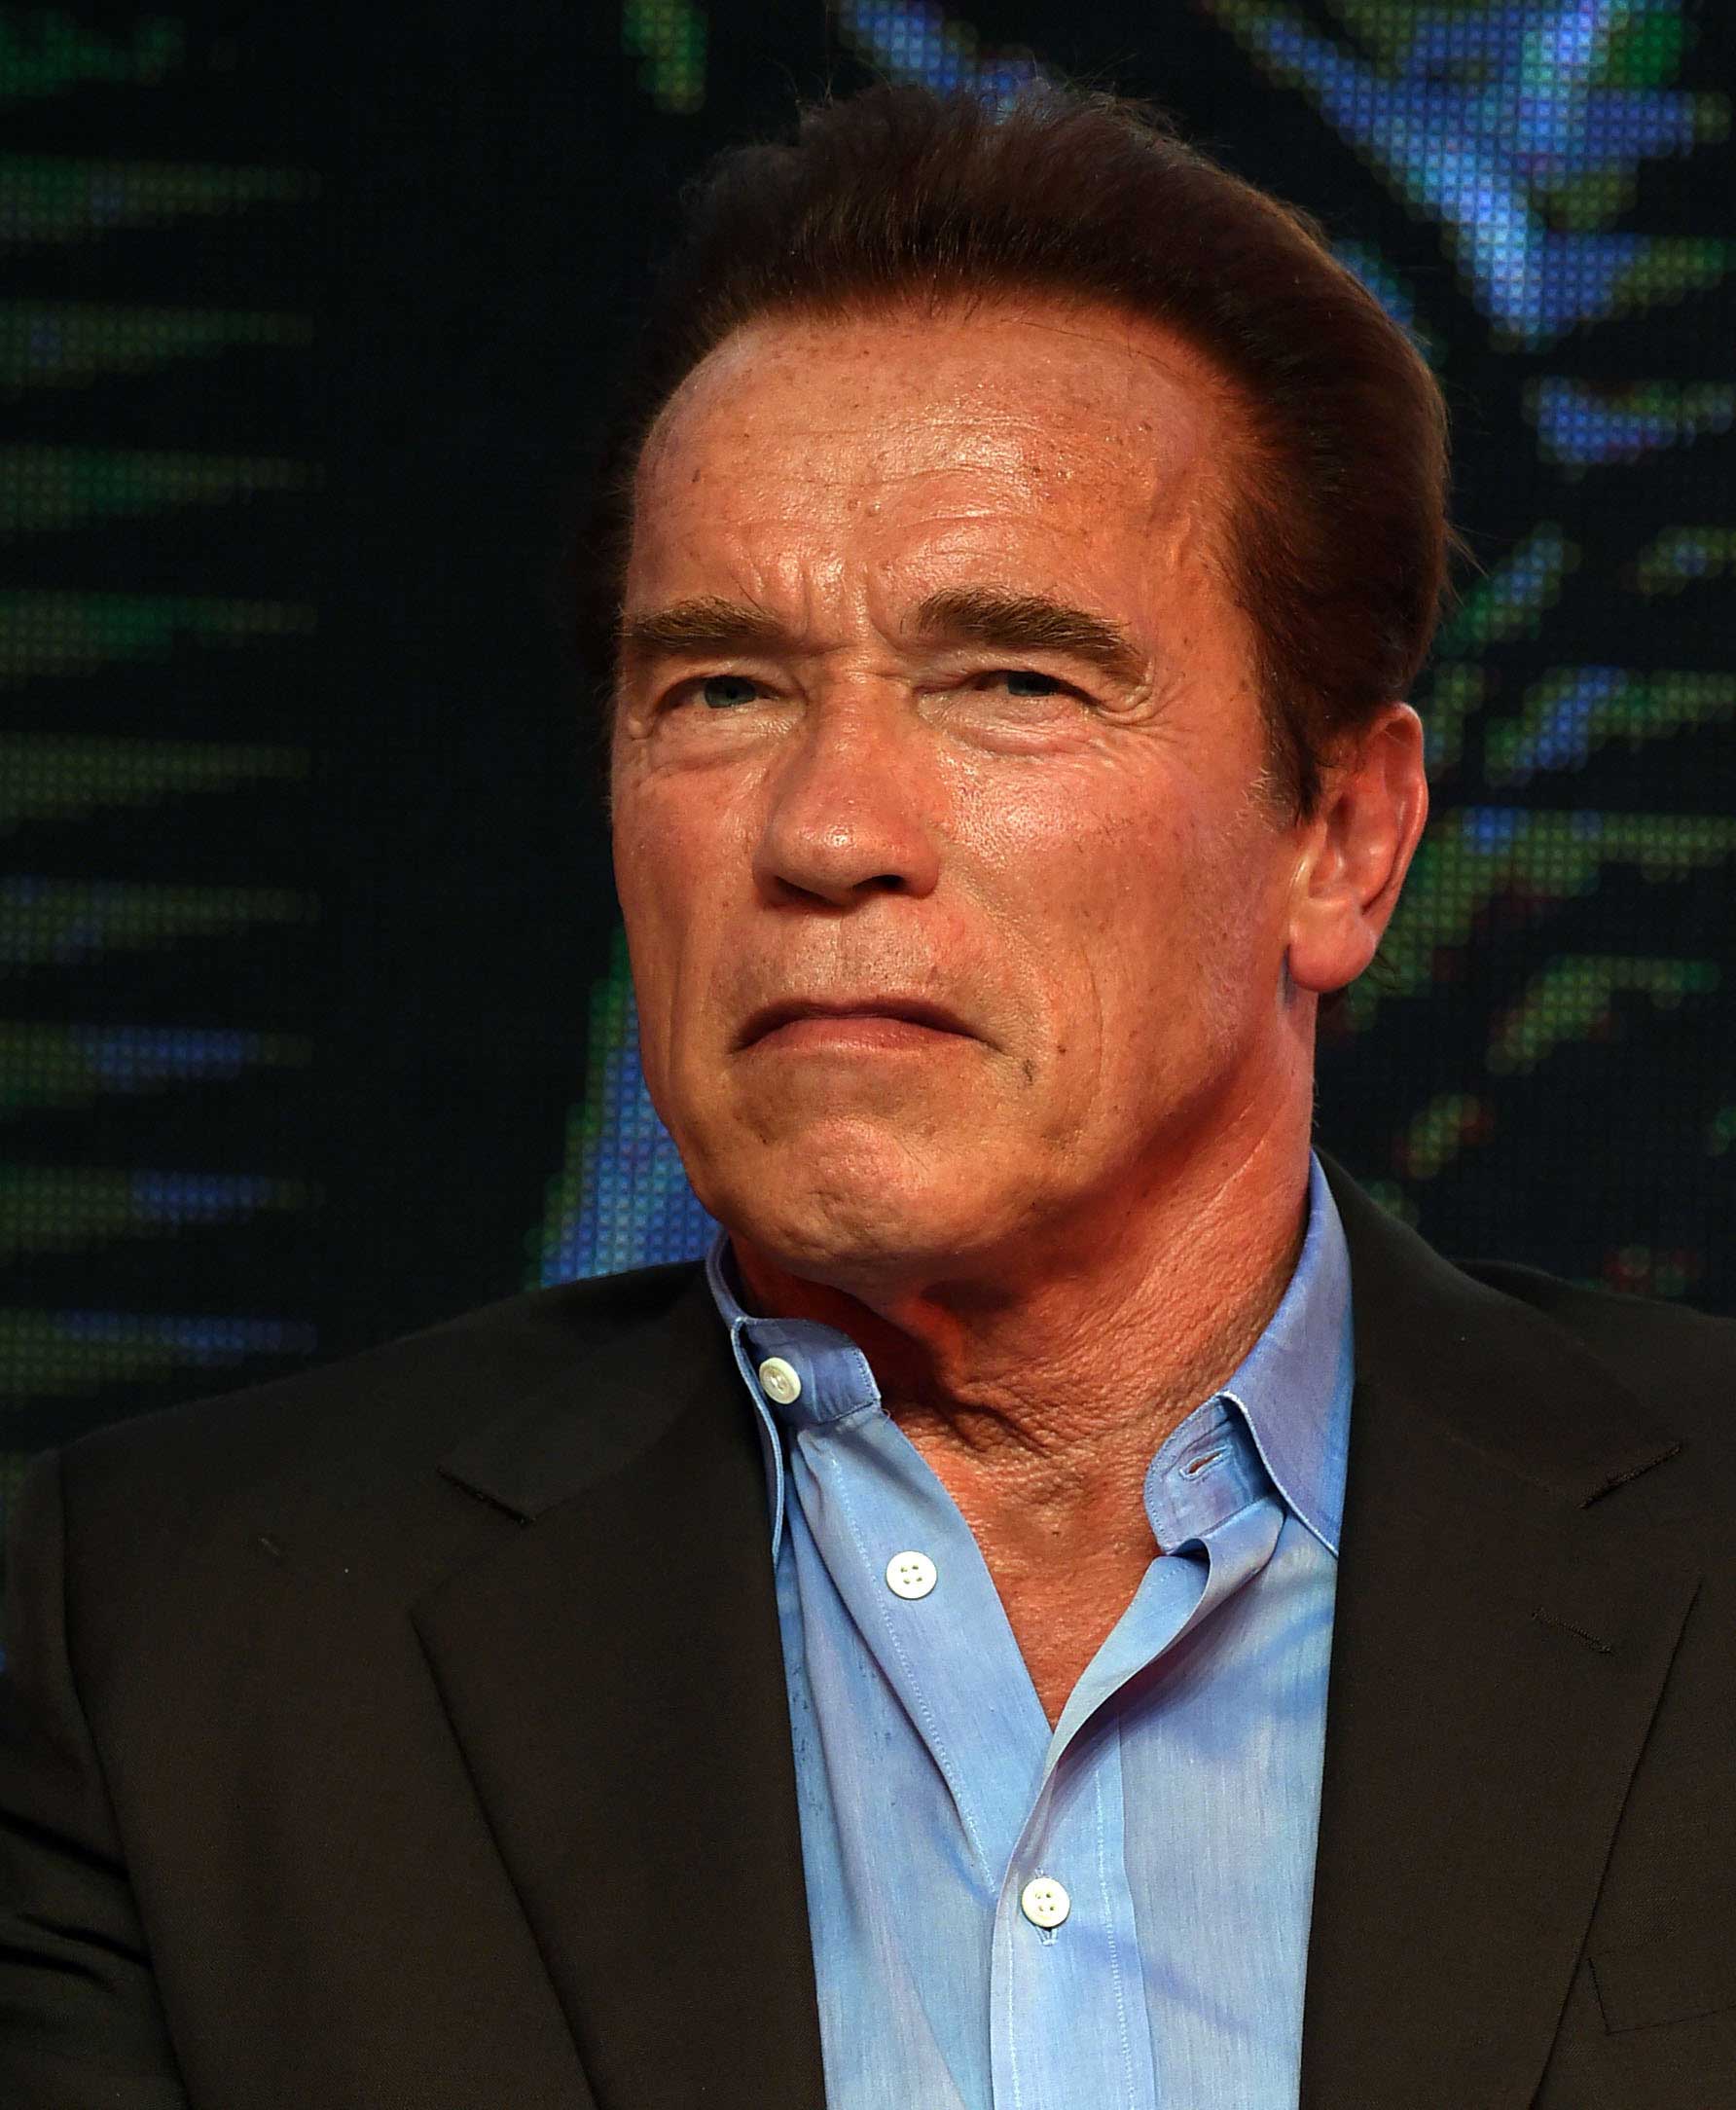 Arnold Schwarzenegger Attends Shanghai Press Conference Of "Terminator Genisys"